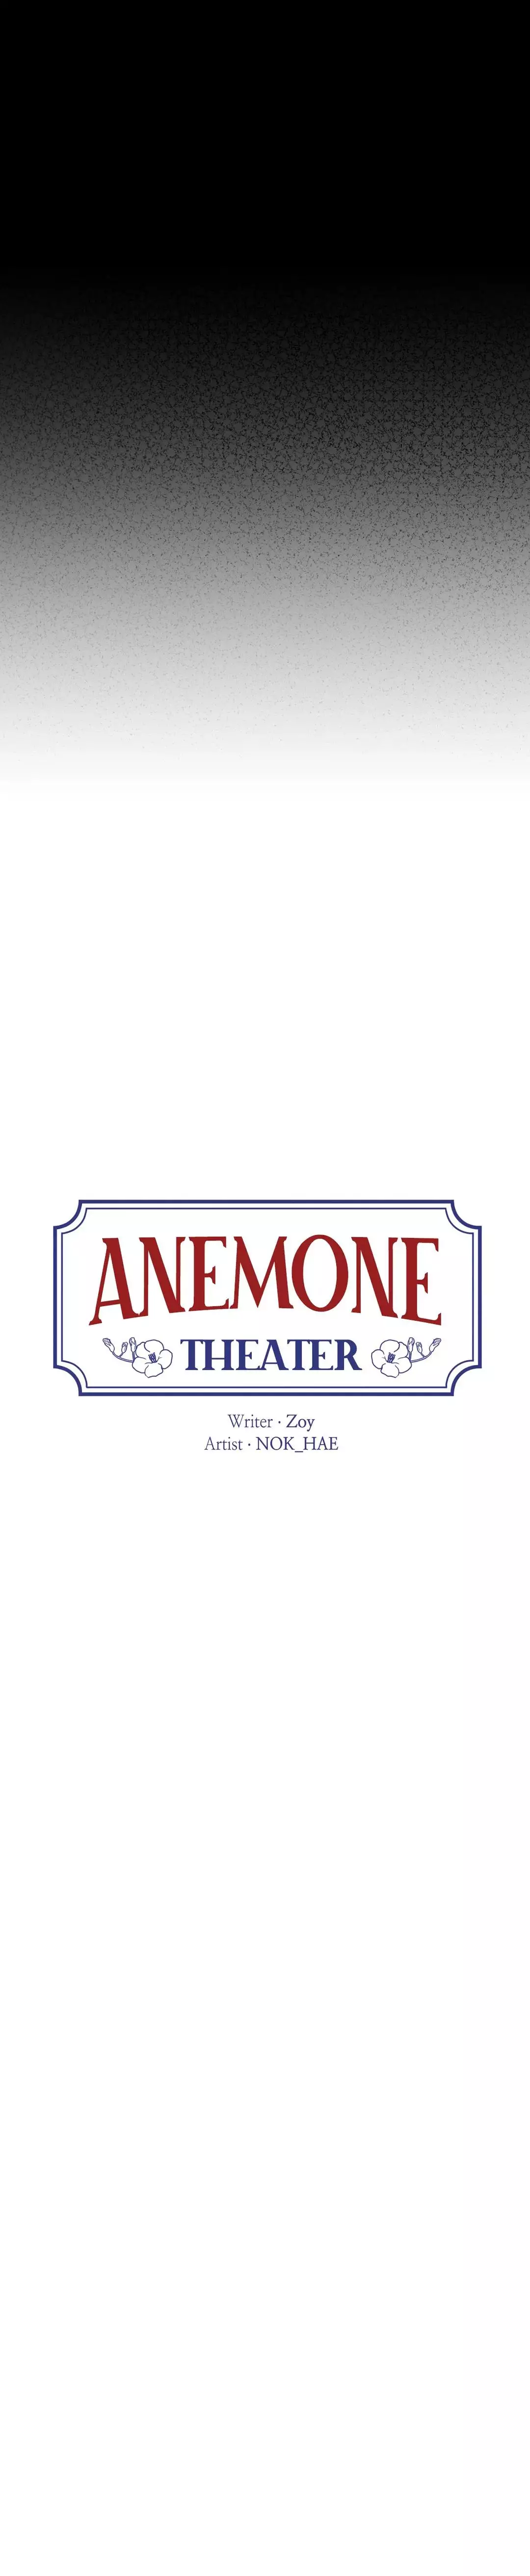 Anemone Theater - 23 page 8-cfa1673a